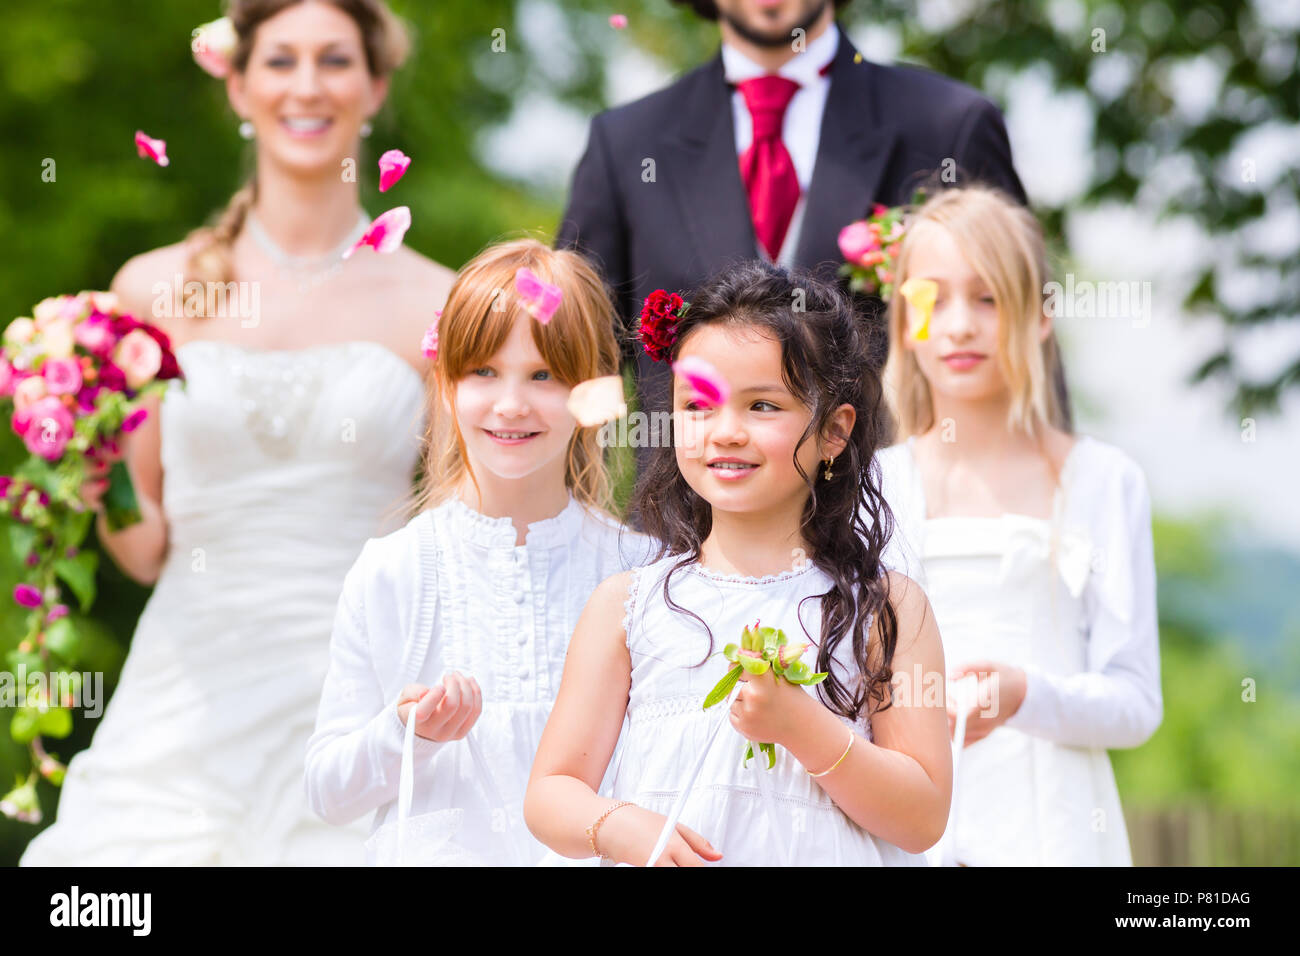 Wedding couple and bridesmaid showering flowers Stock Photo